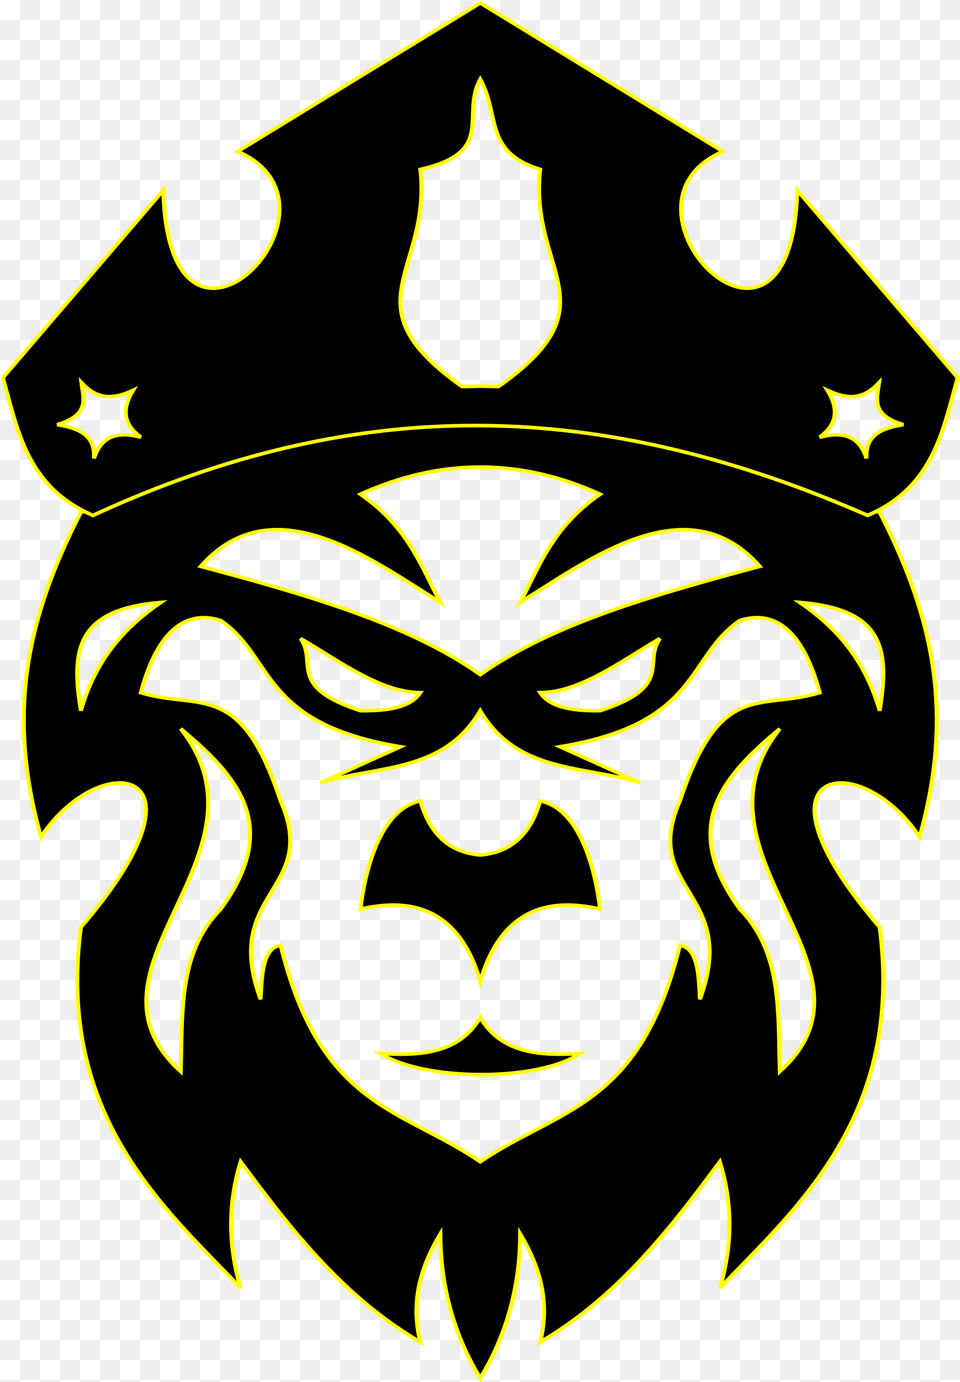 The Lion King Clip Arts Kepala Singa Vektor, Symbol, Emblem Png Image